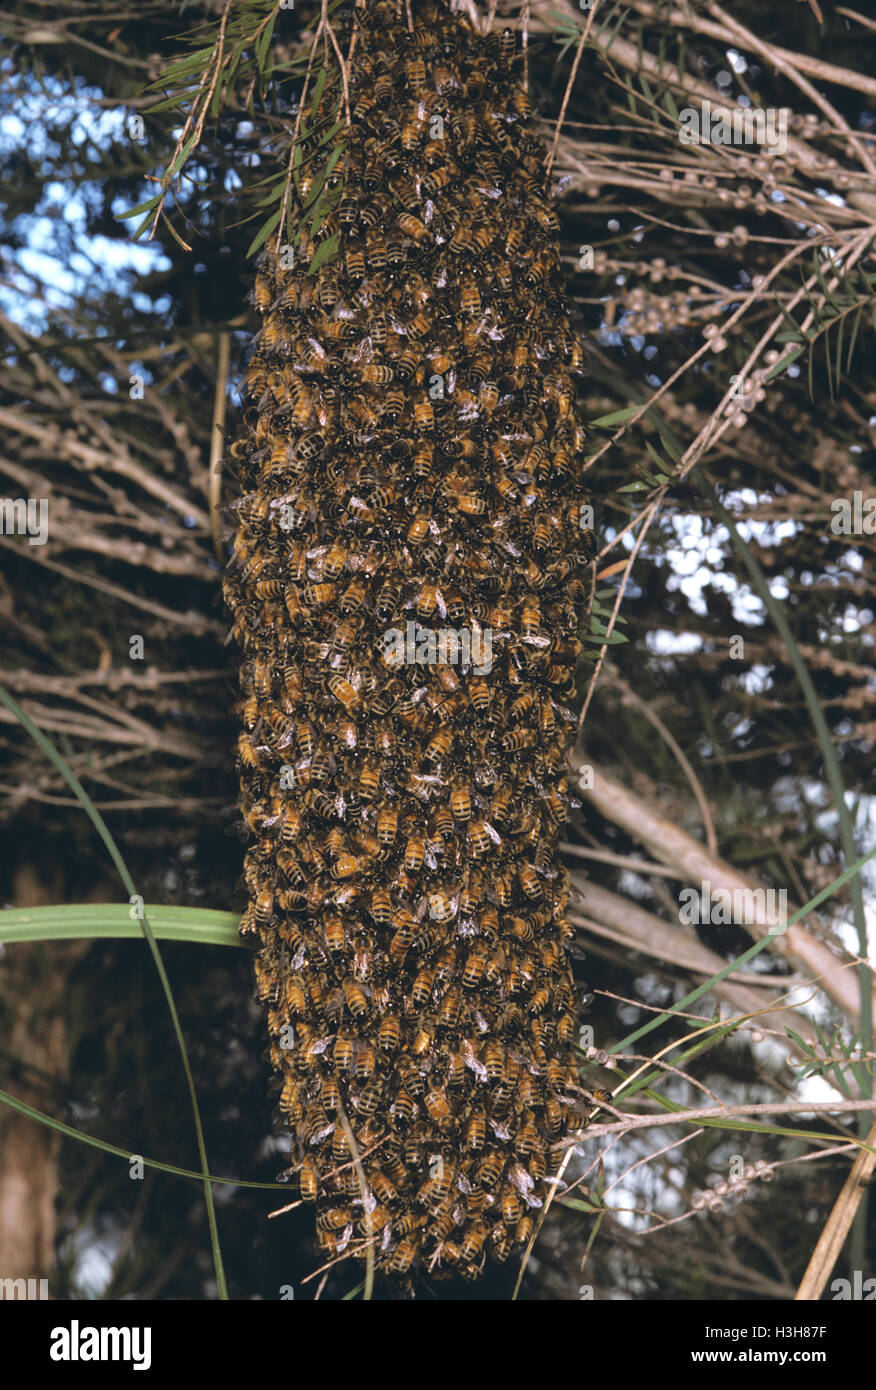 Western honey bee (Apis mellifera) Stock Photo